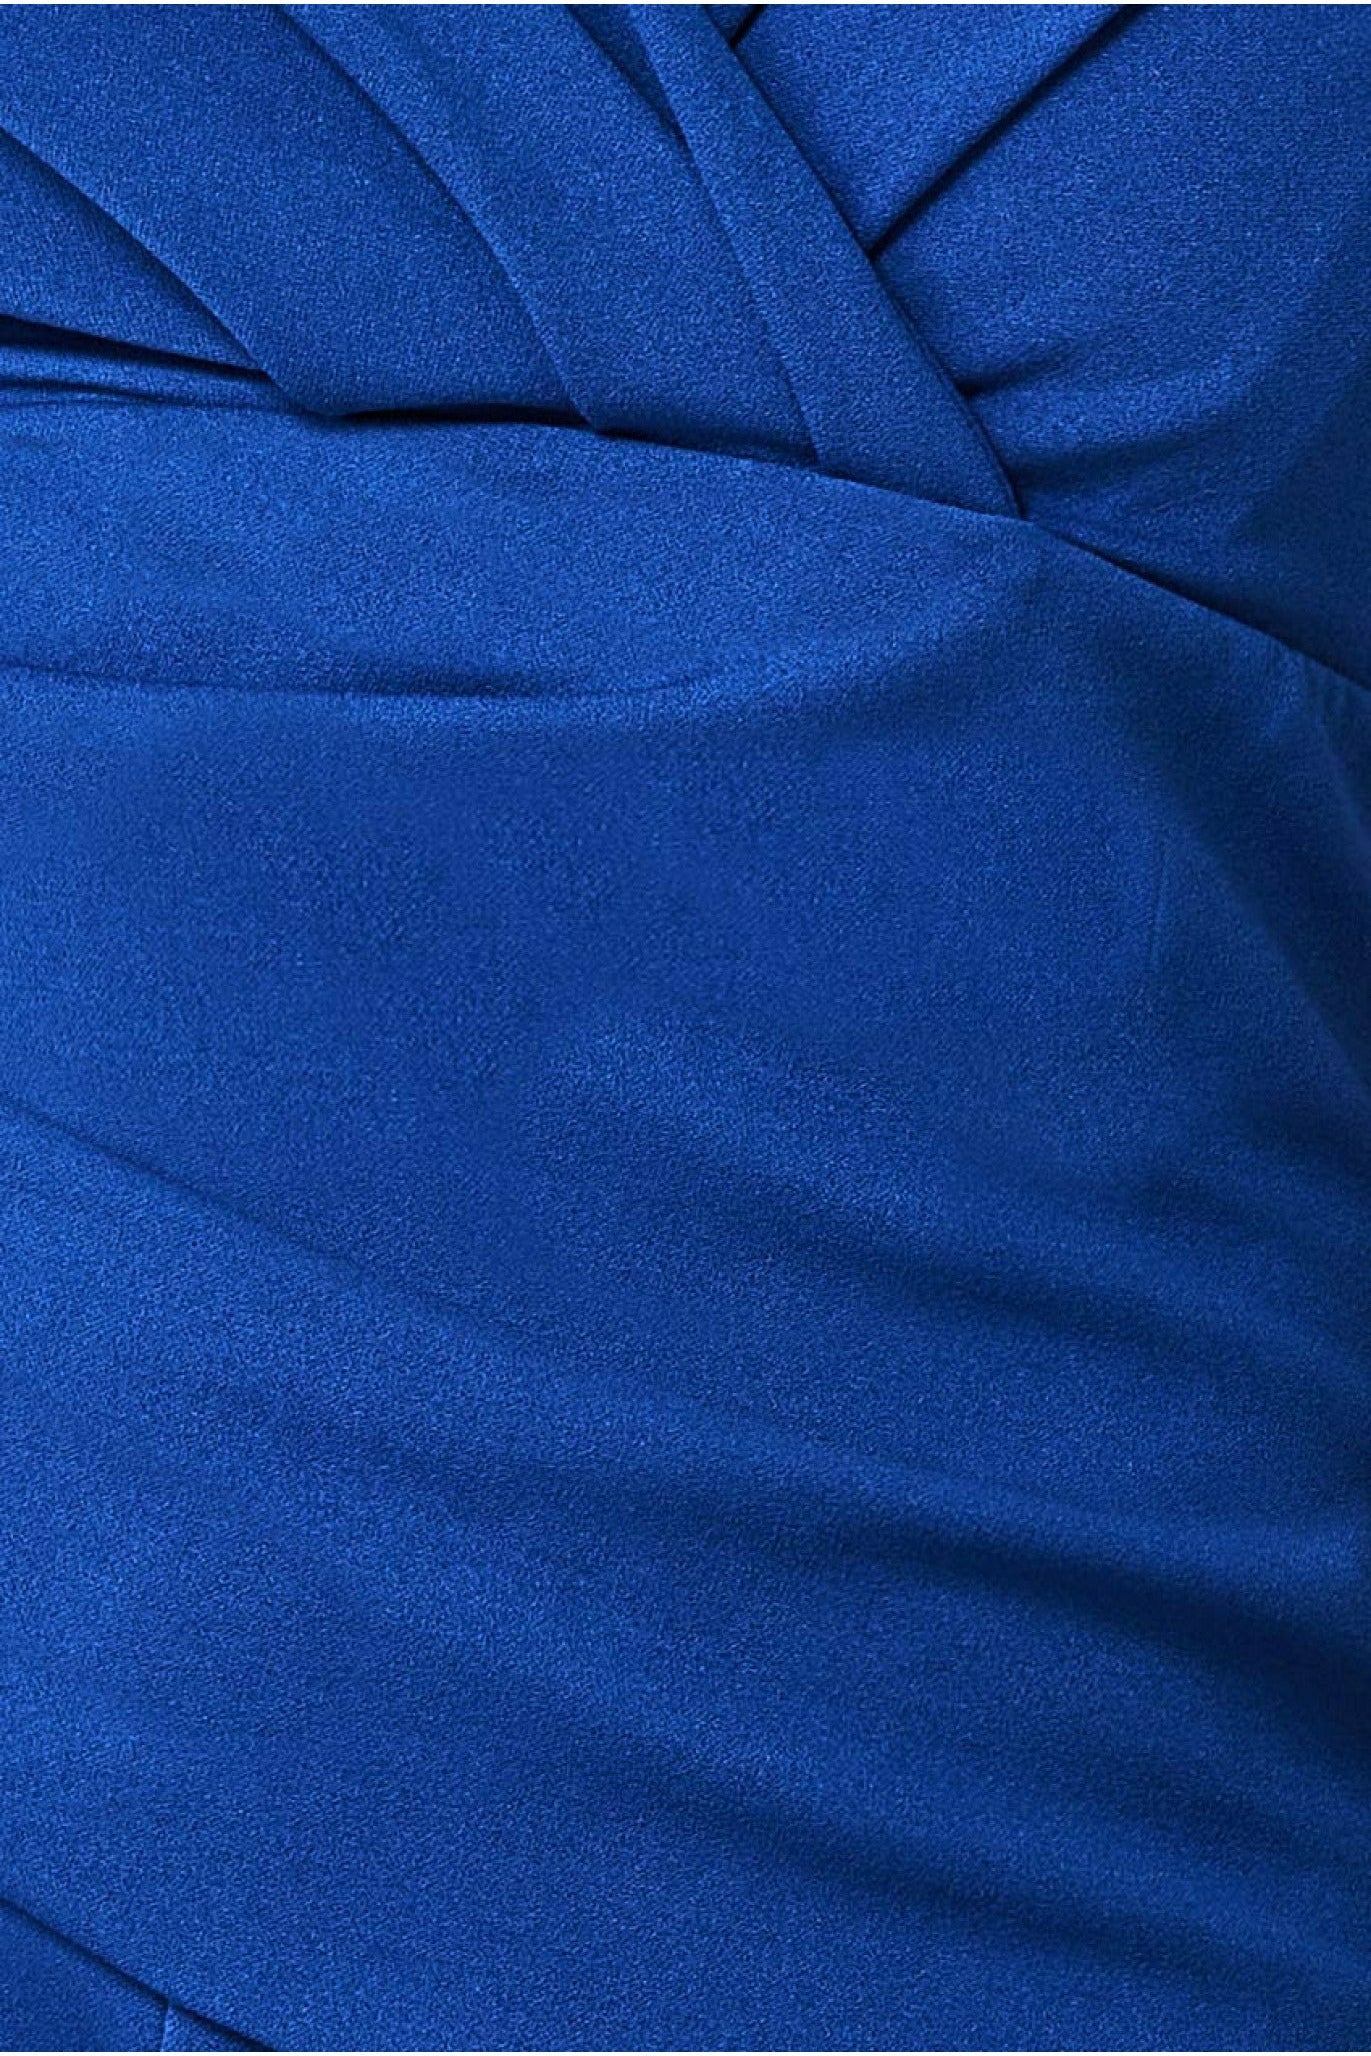 Bardot Scuba Jumpsuit - Royal Blue TR113B